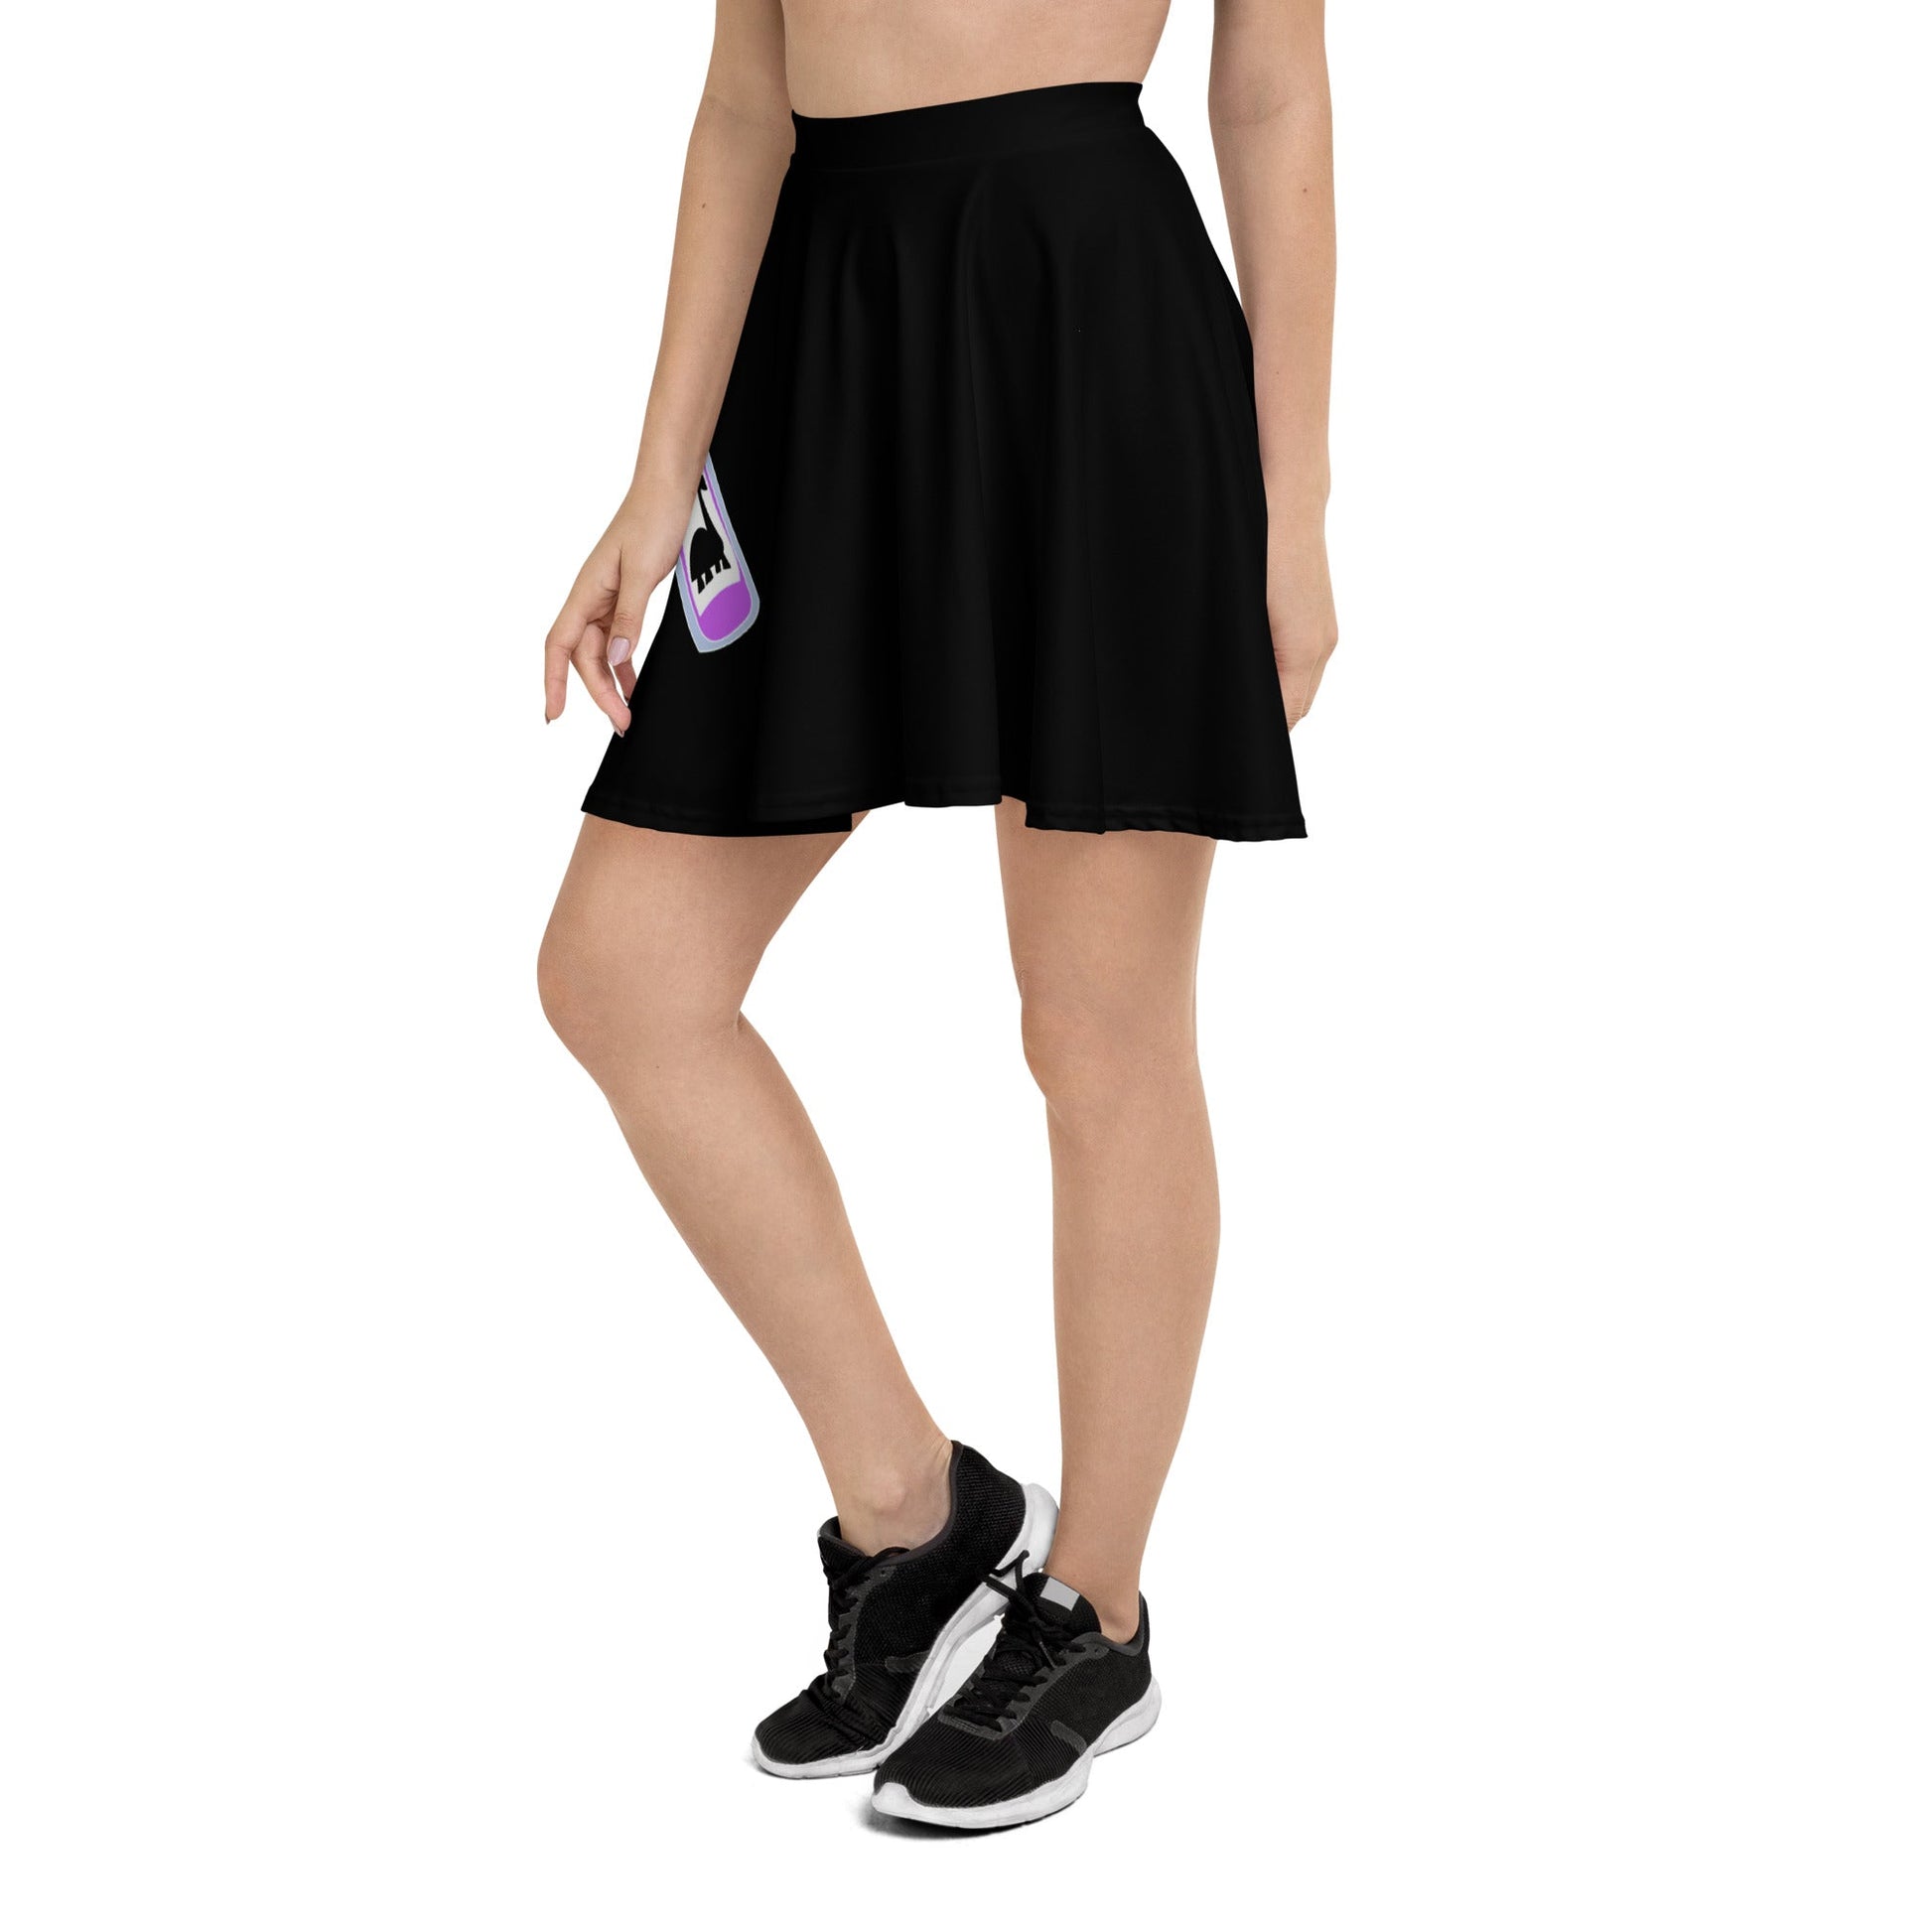 The Yzma Evil Villain Skater Skirt- Running Costume, Cosplay, Bounding cosplaydisney adultSkater SkirtLittle Lady Shay Boutique